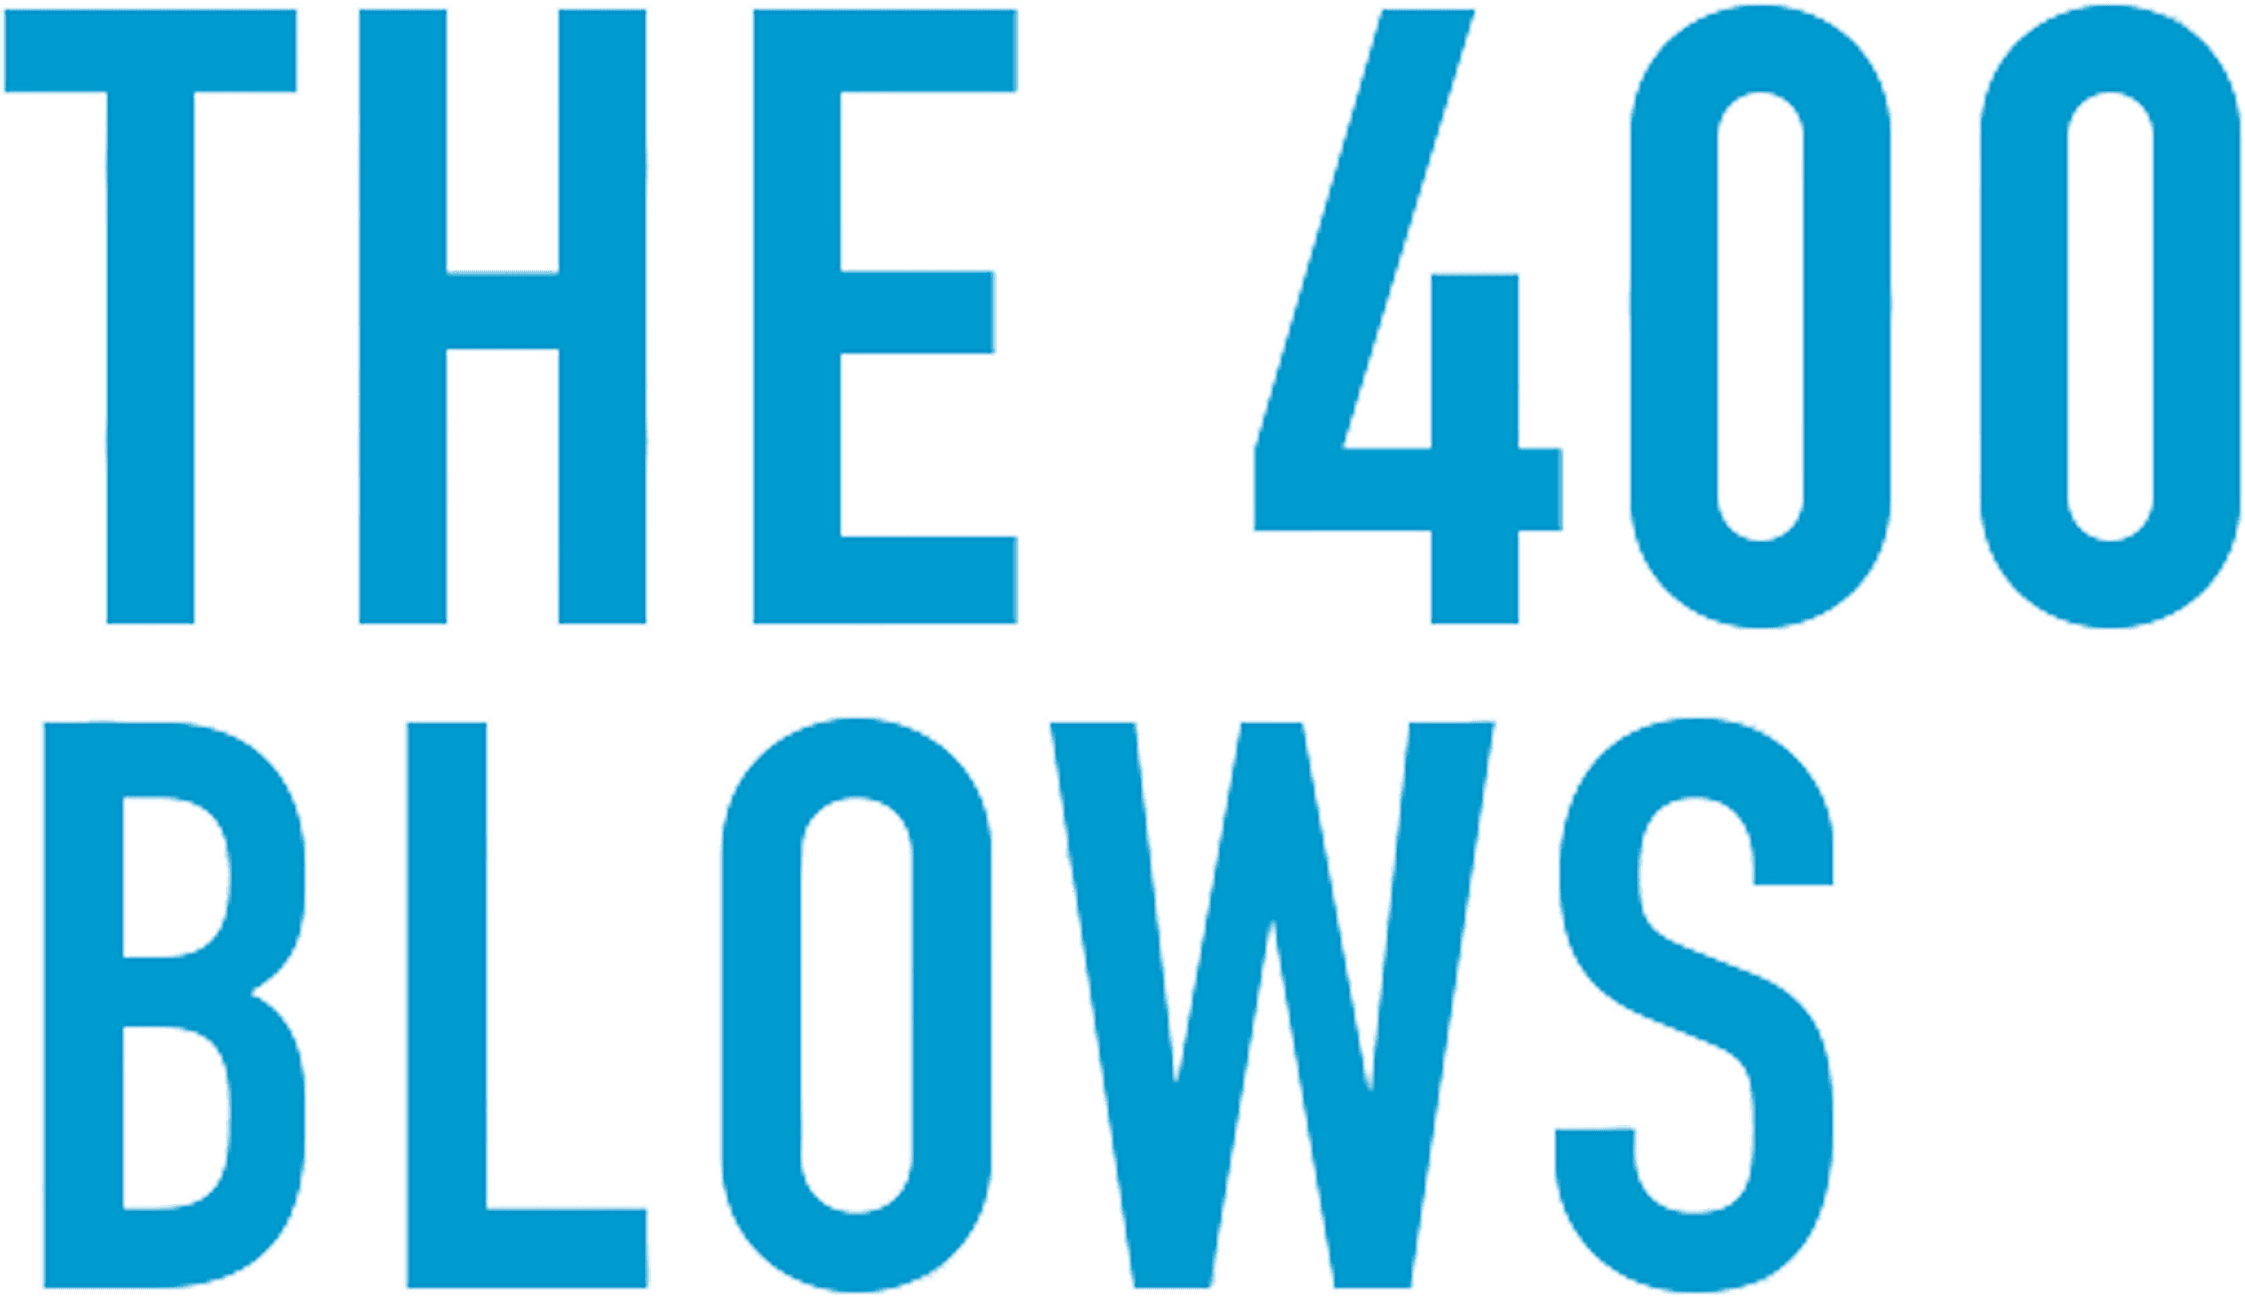 The 400 Blows logo